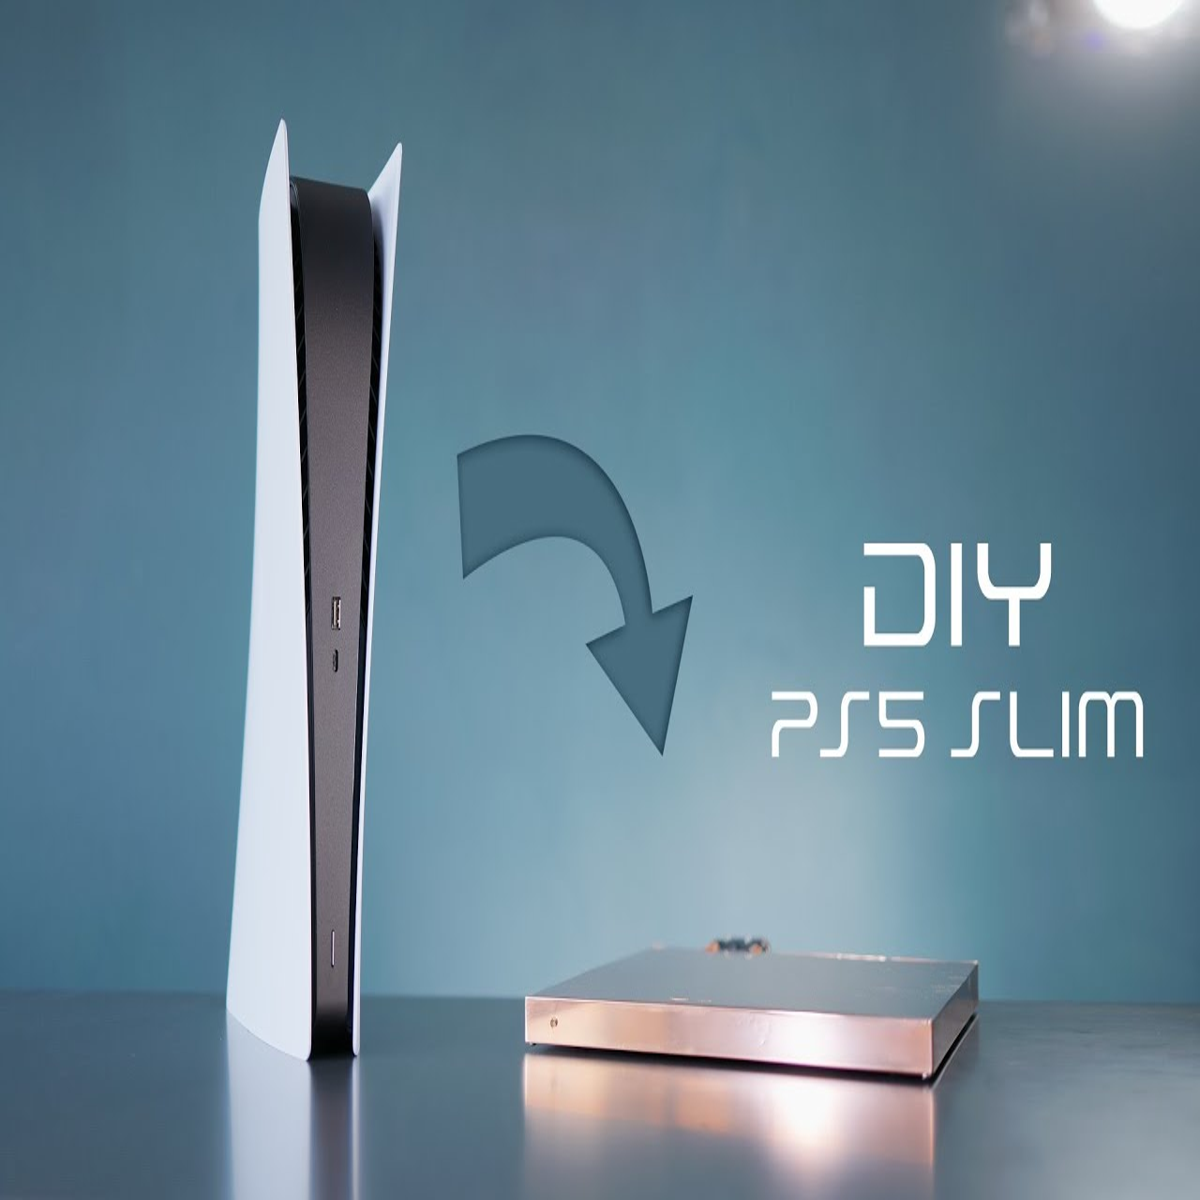 PS5 Slim vs PS5 - is slimmer better? - PC Guide